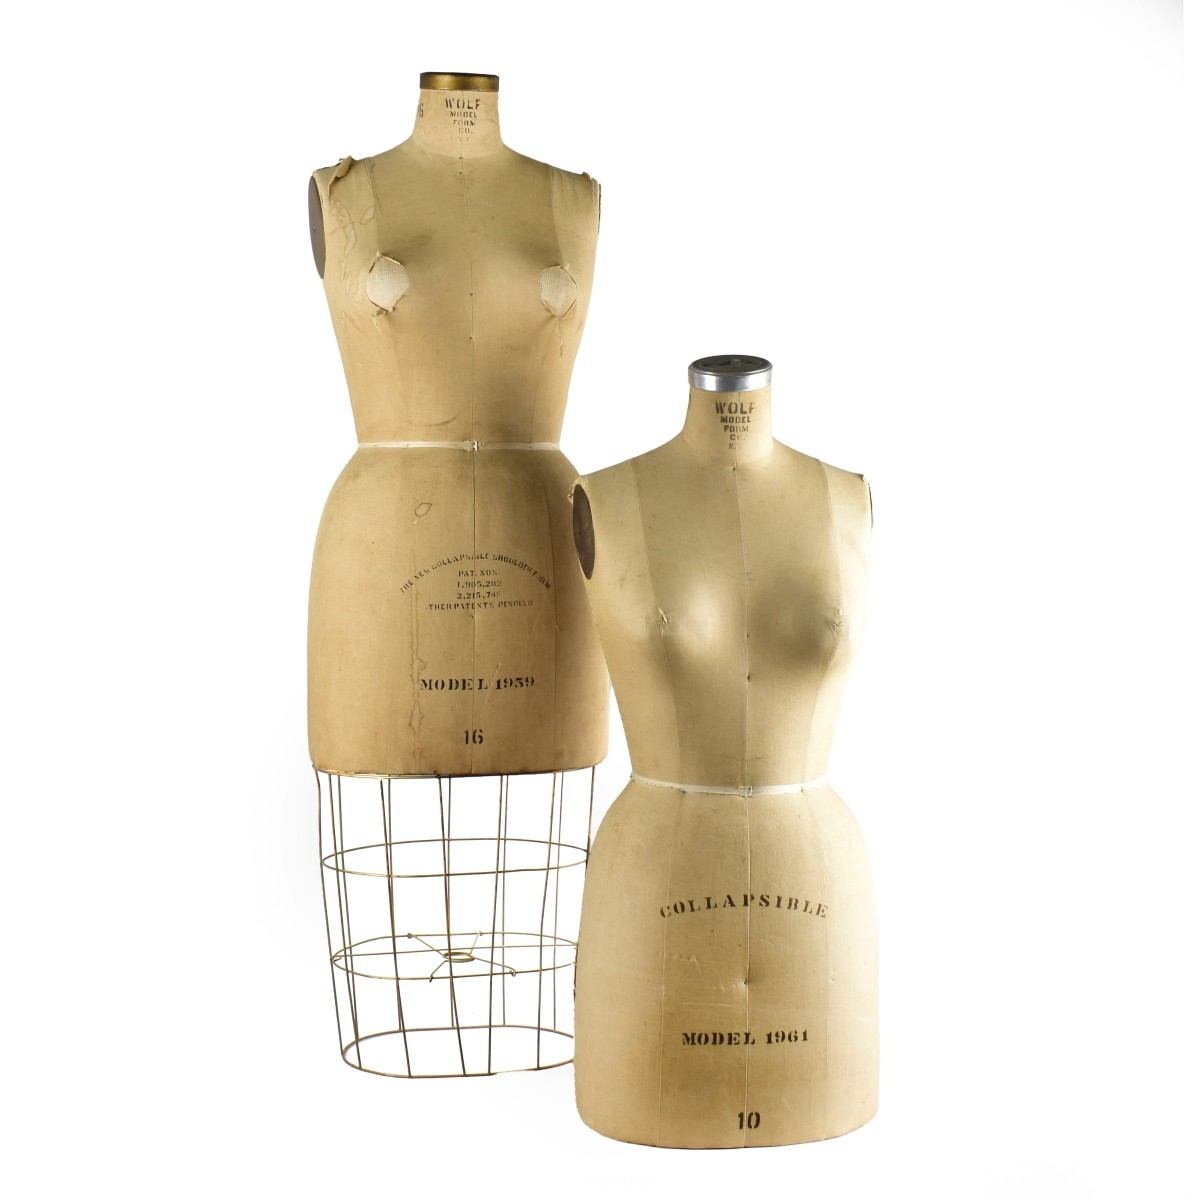 Two (2) Vintage Mannequin Torso Dress Forms